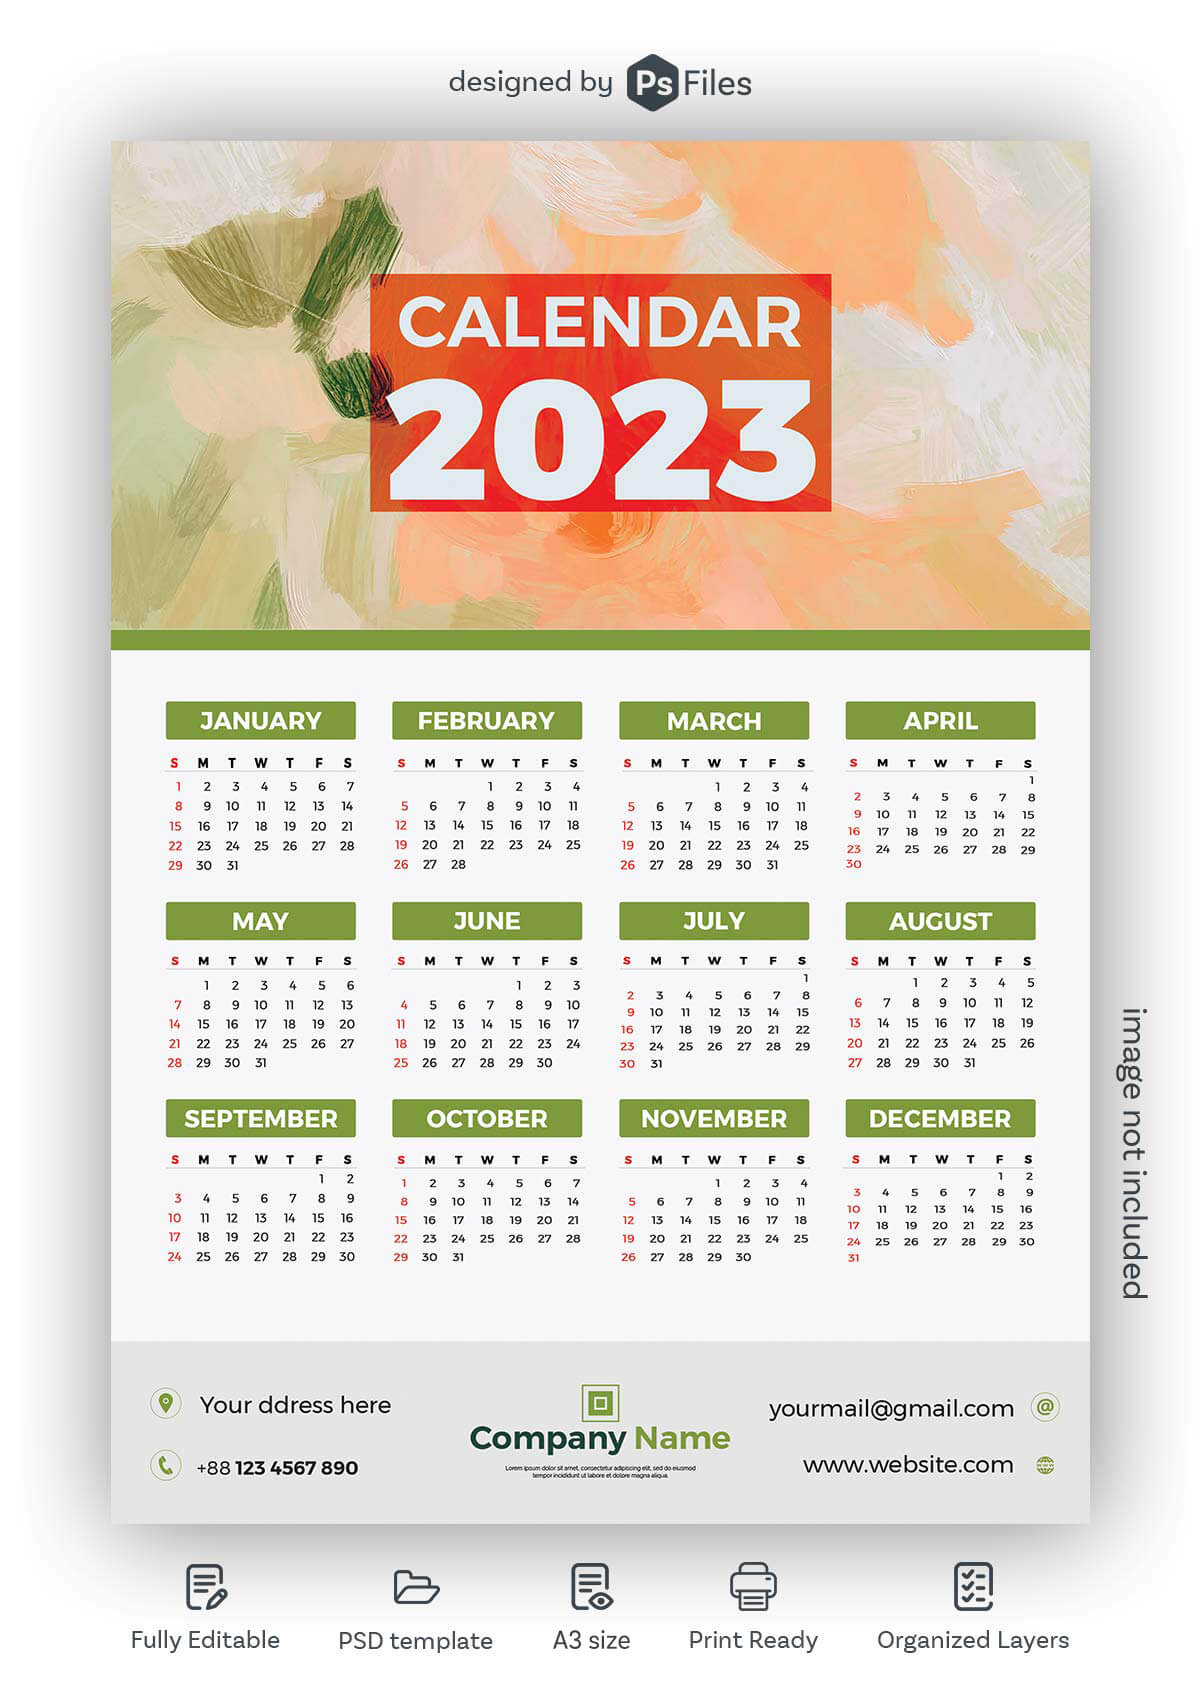 2023 A3 Calendar Design PSD Template free PsFiles free download